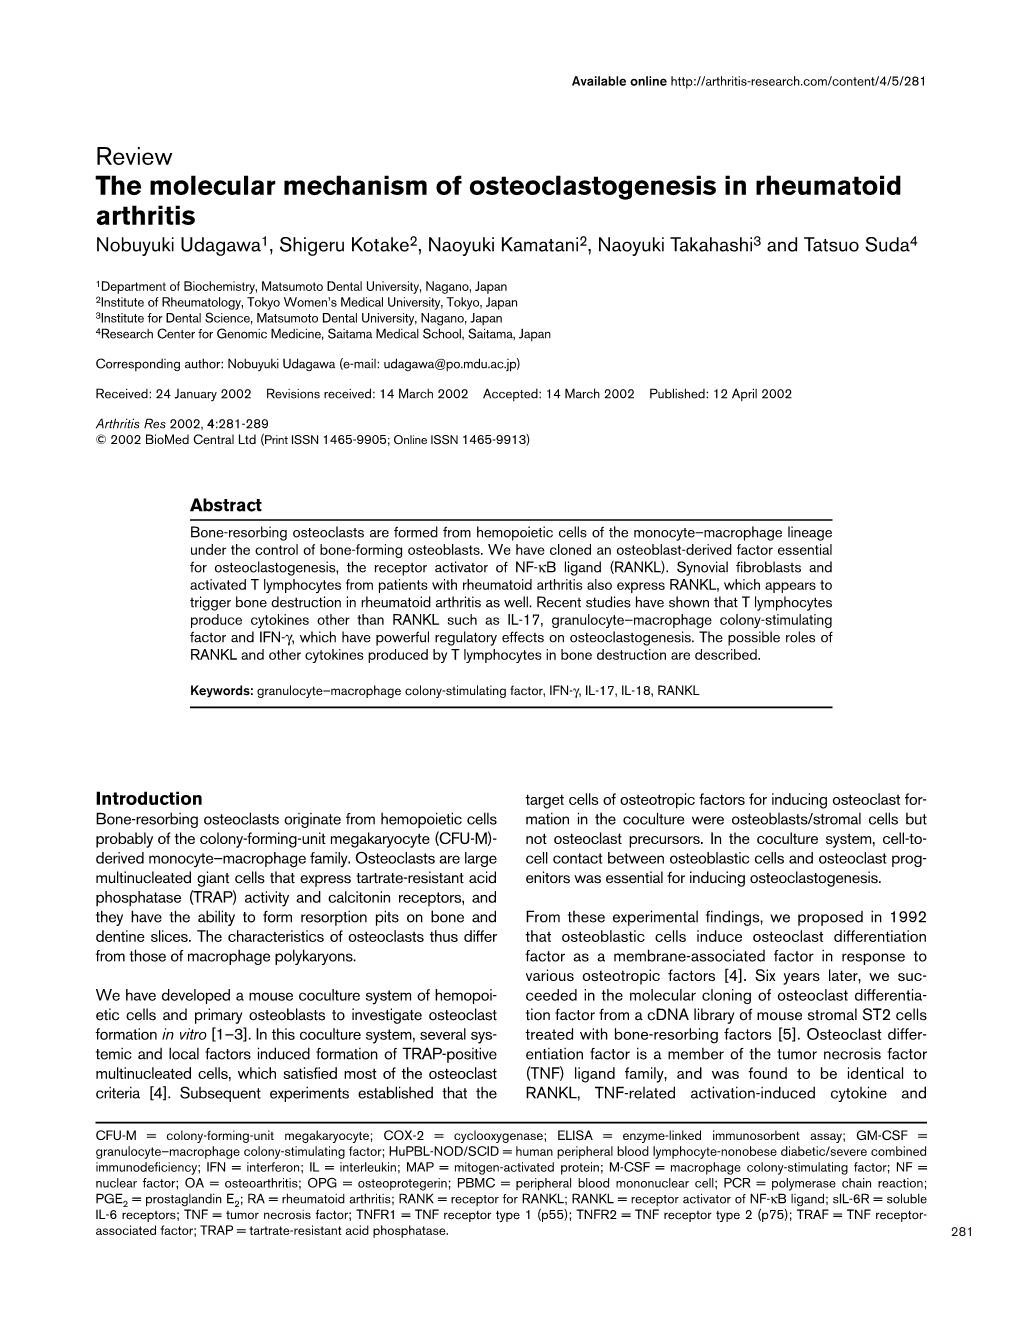 The Molecular Mechanism of Osteoclastogenesis in Rheumatoid Arthritis Nobuyuki Udagawa1, Shigeru Kotake2, Naoyuki Kamatani2, Naoyuki Takahashi3 and Tatsuo Suda4